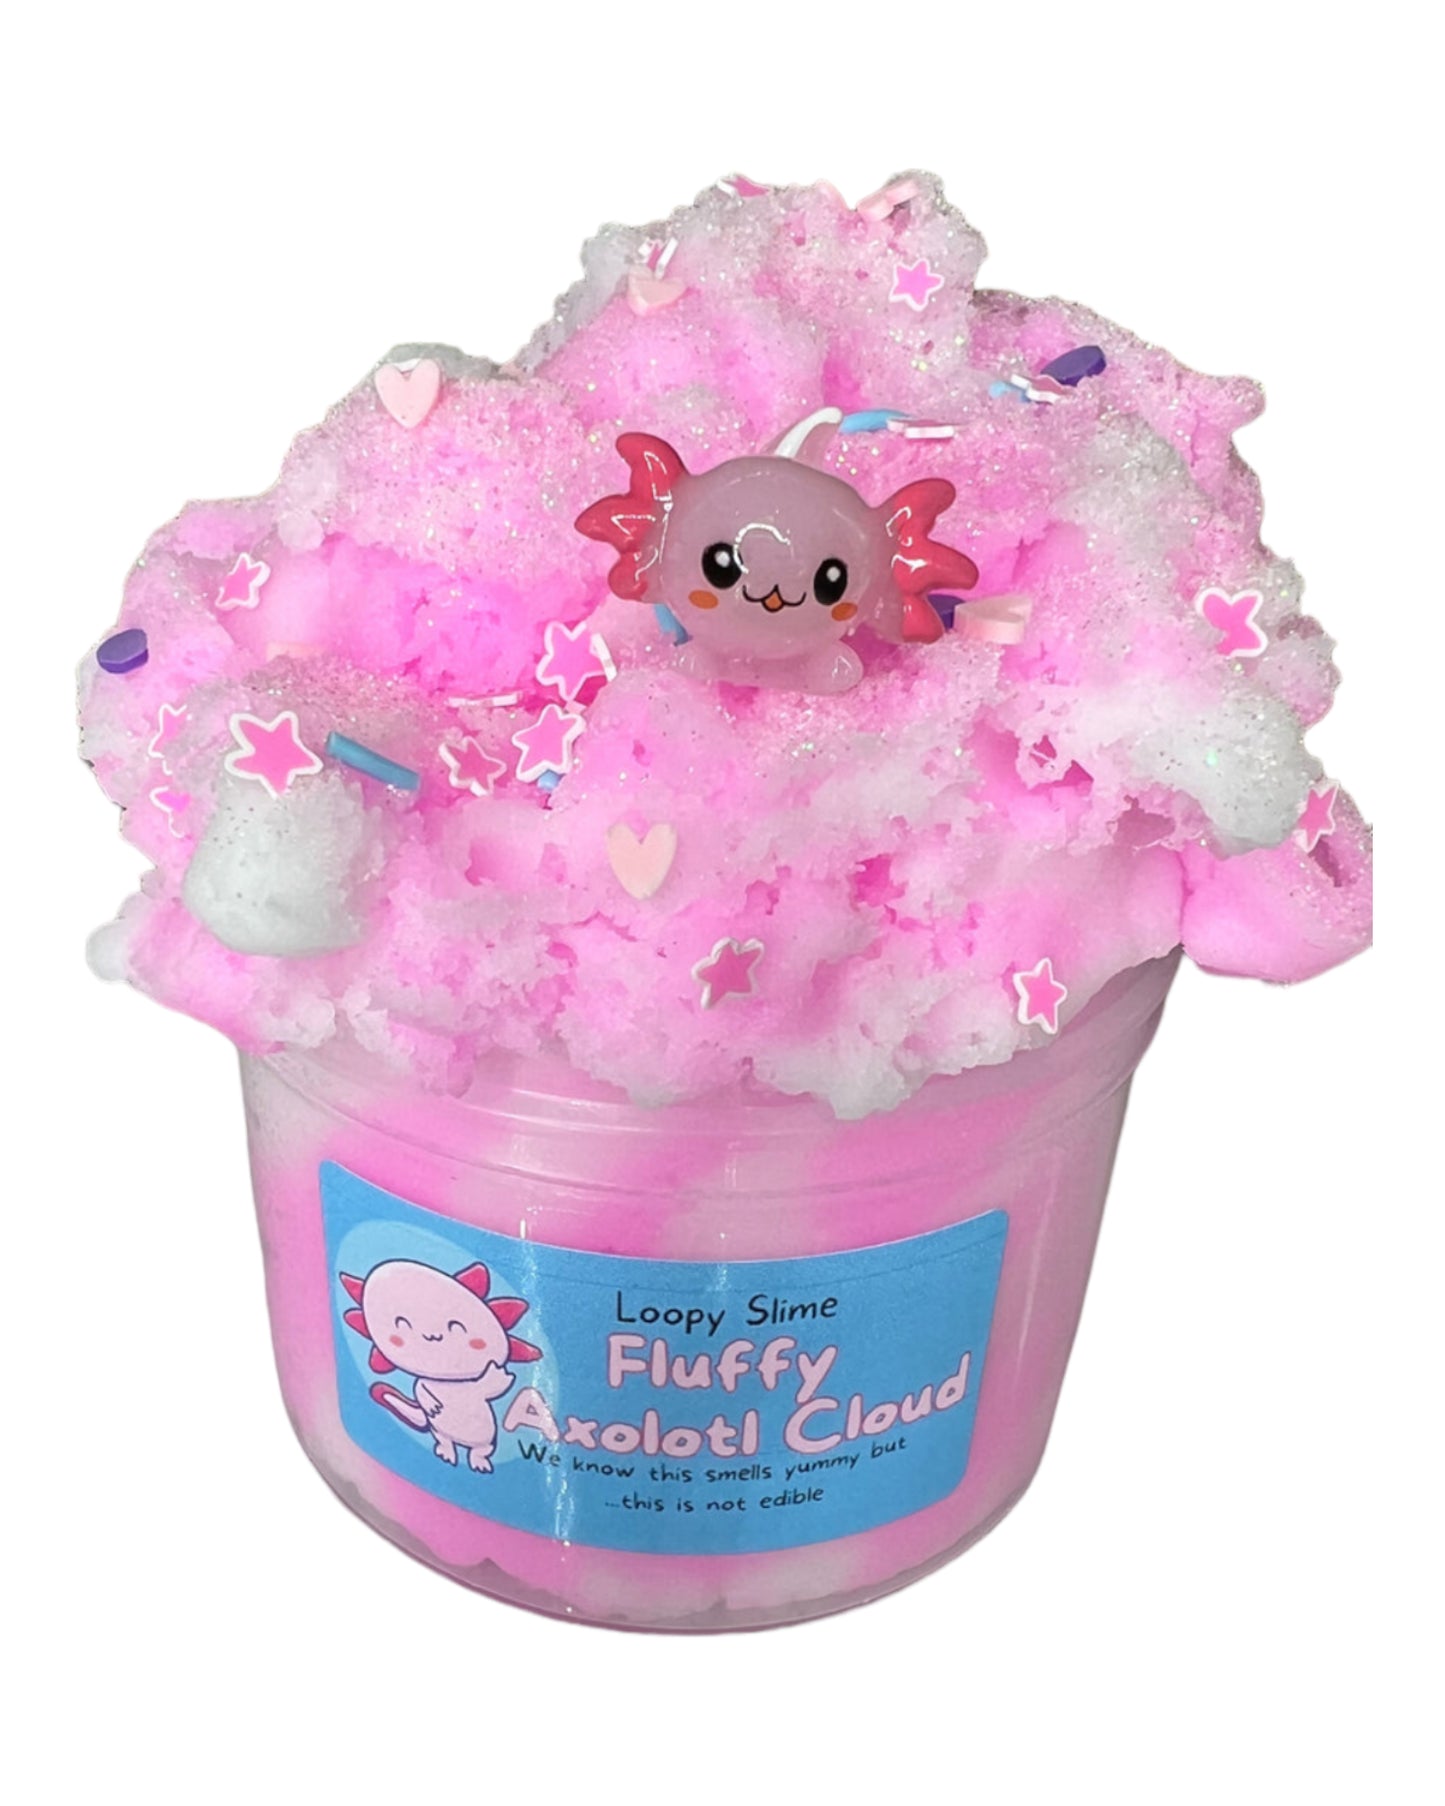 Fluffy Axolotl Cloud Slime – Loopy Slime